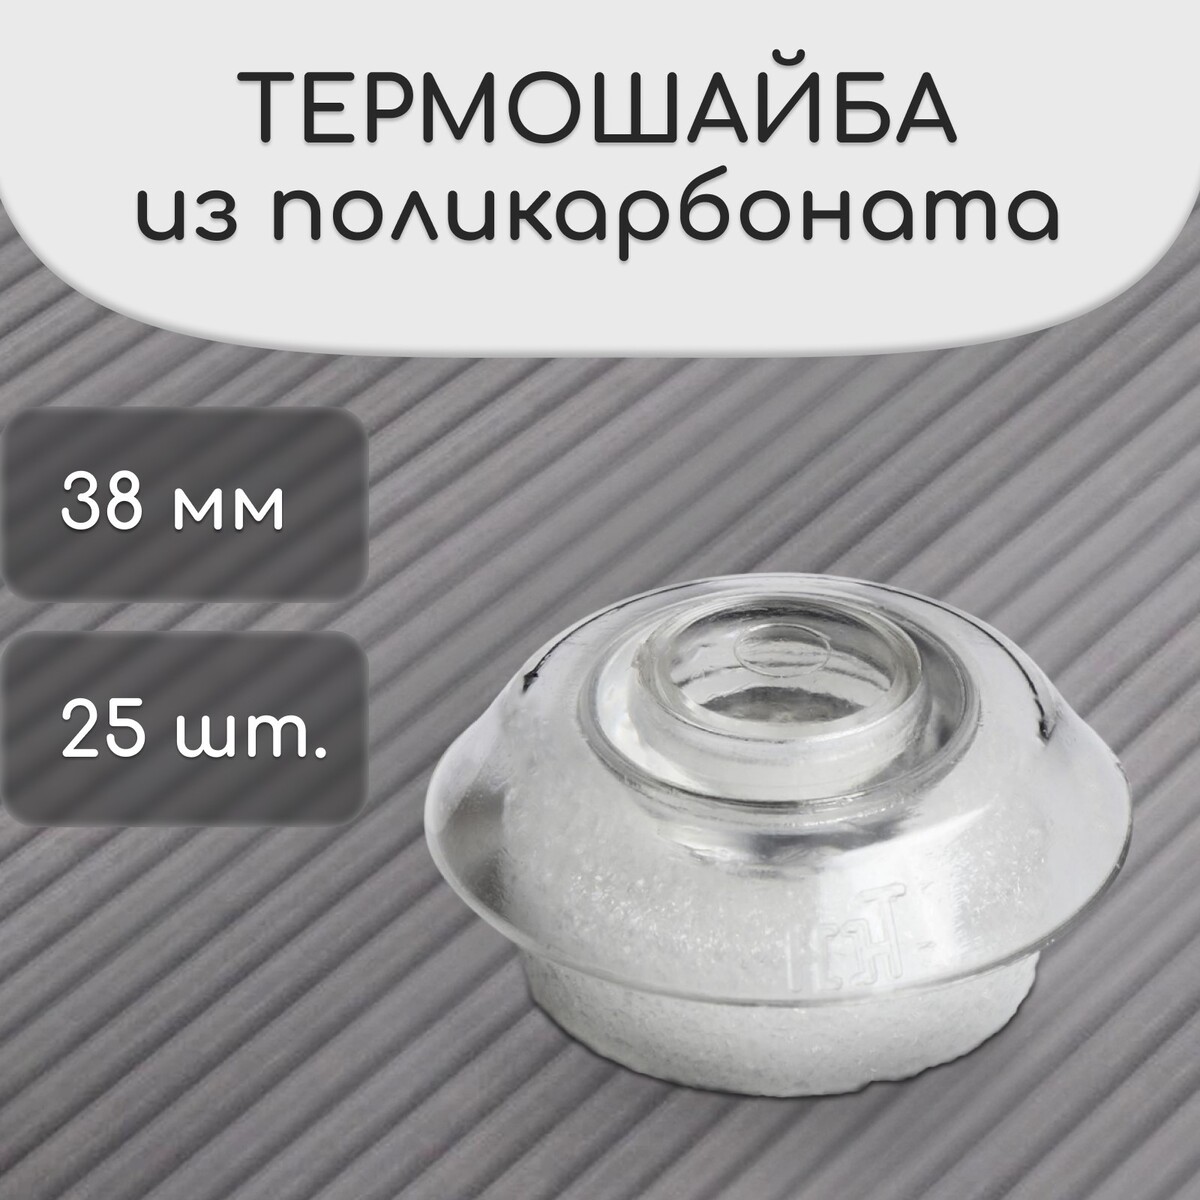 Термошайба для сотового поликарбоната SH T, 6.5x30 мм (бронза)